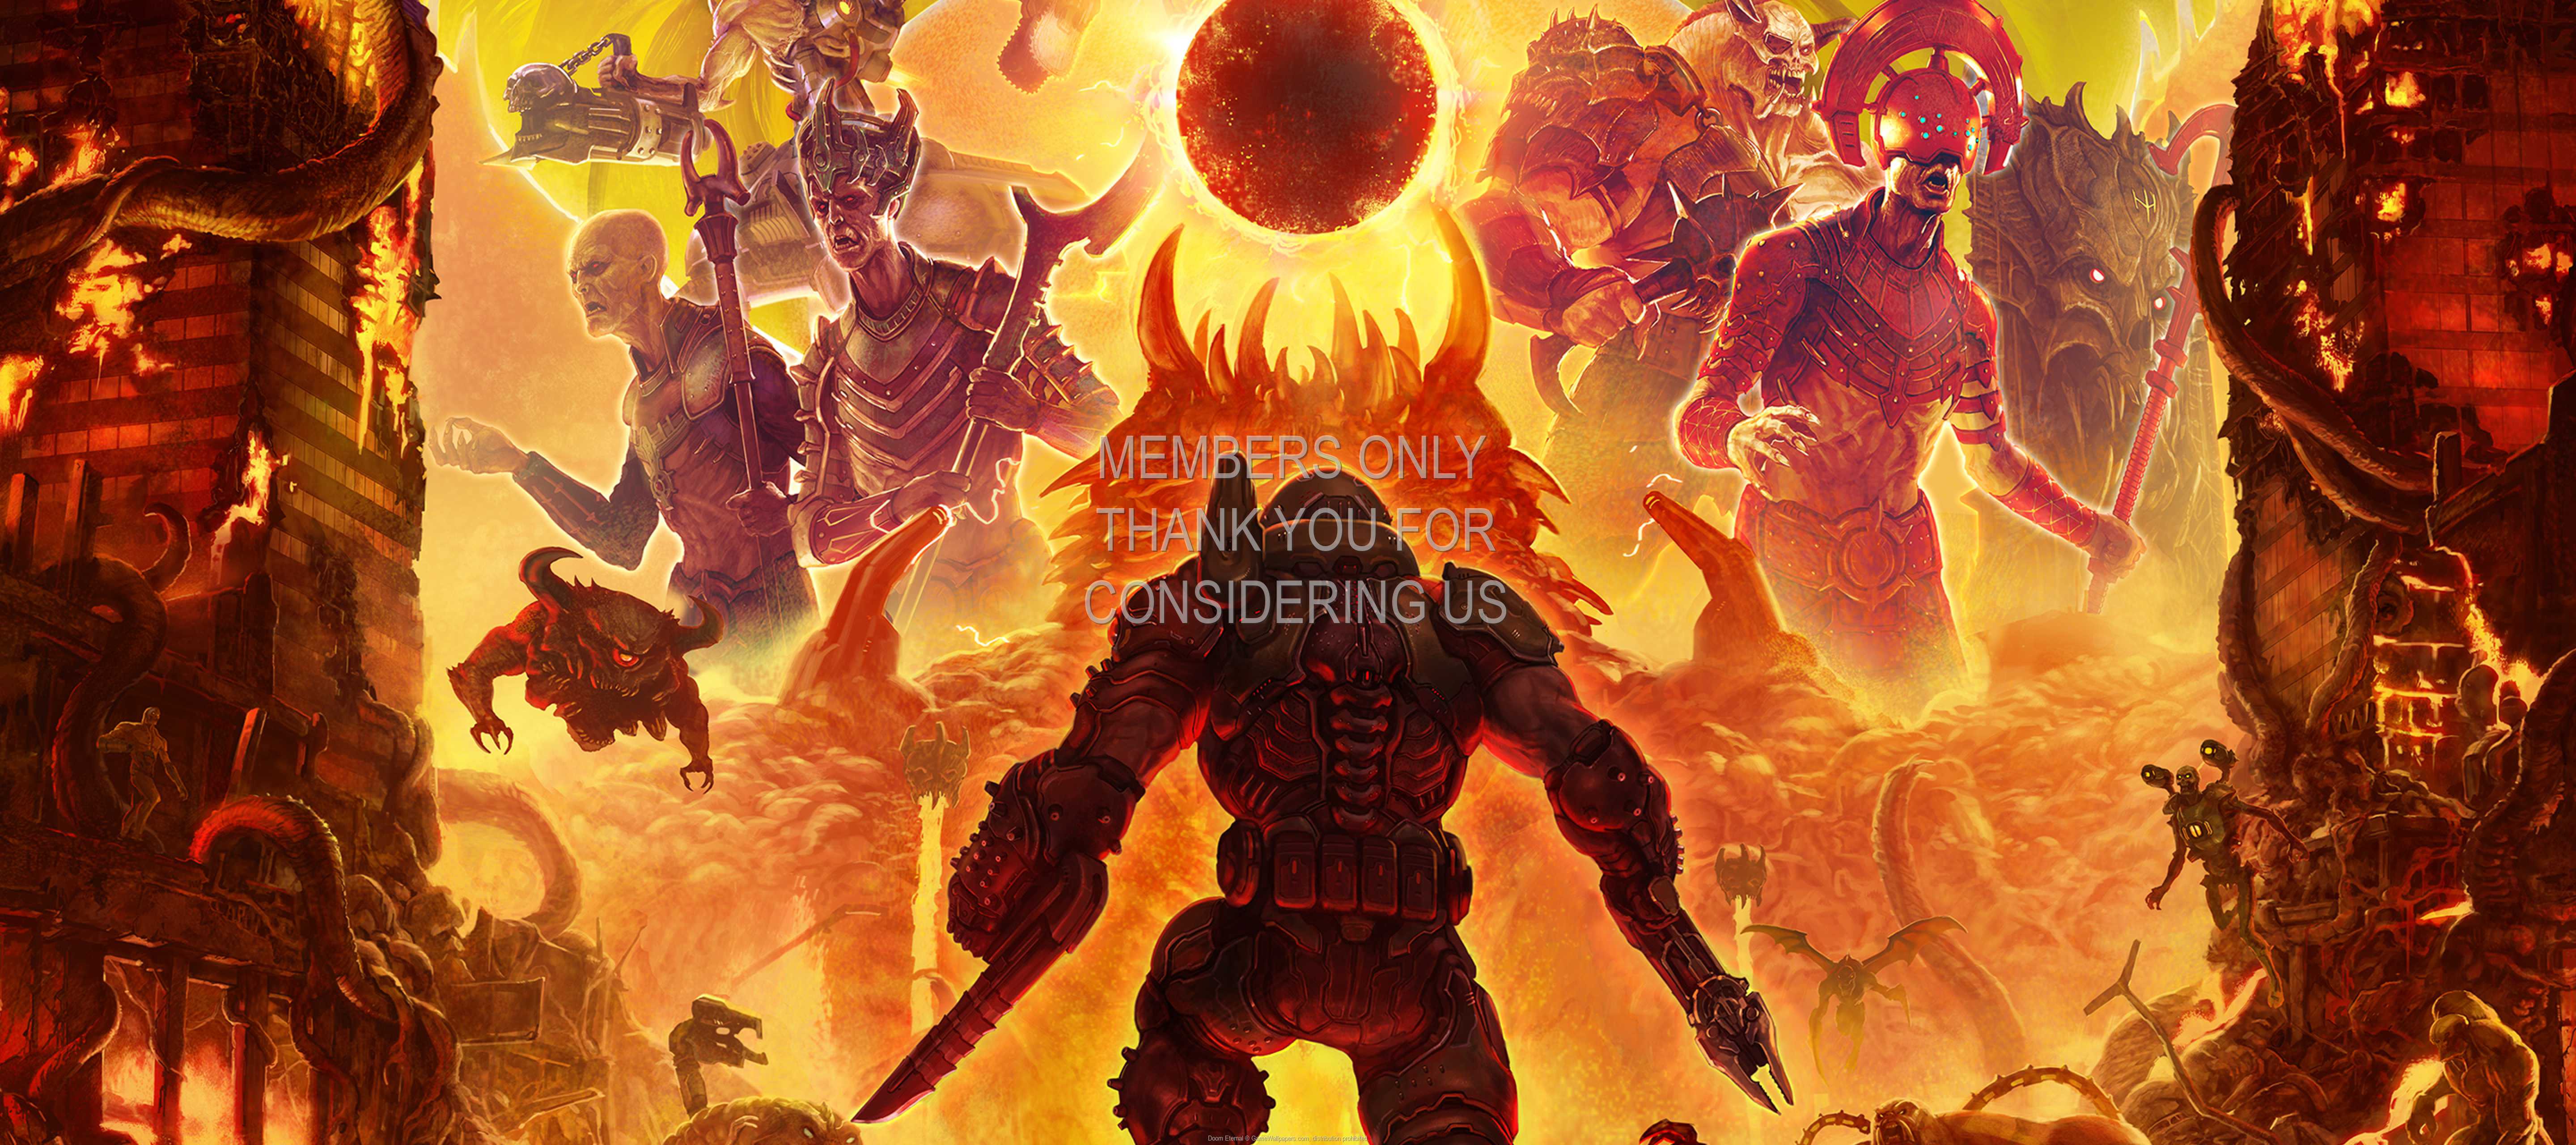 Doom Eternal 1440p%20Horizontal Mobile wallpaper or background 05